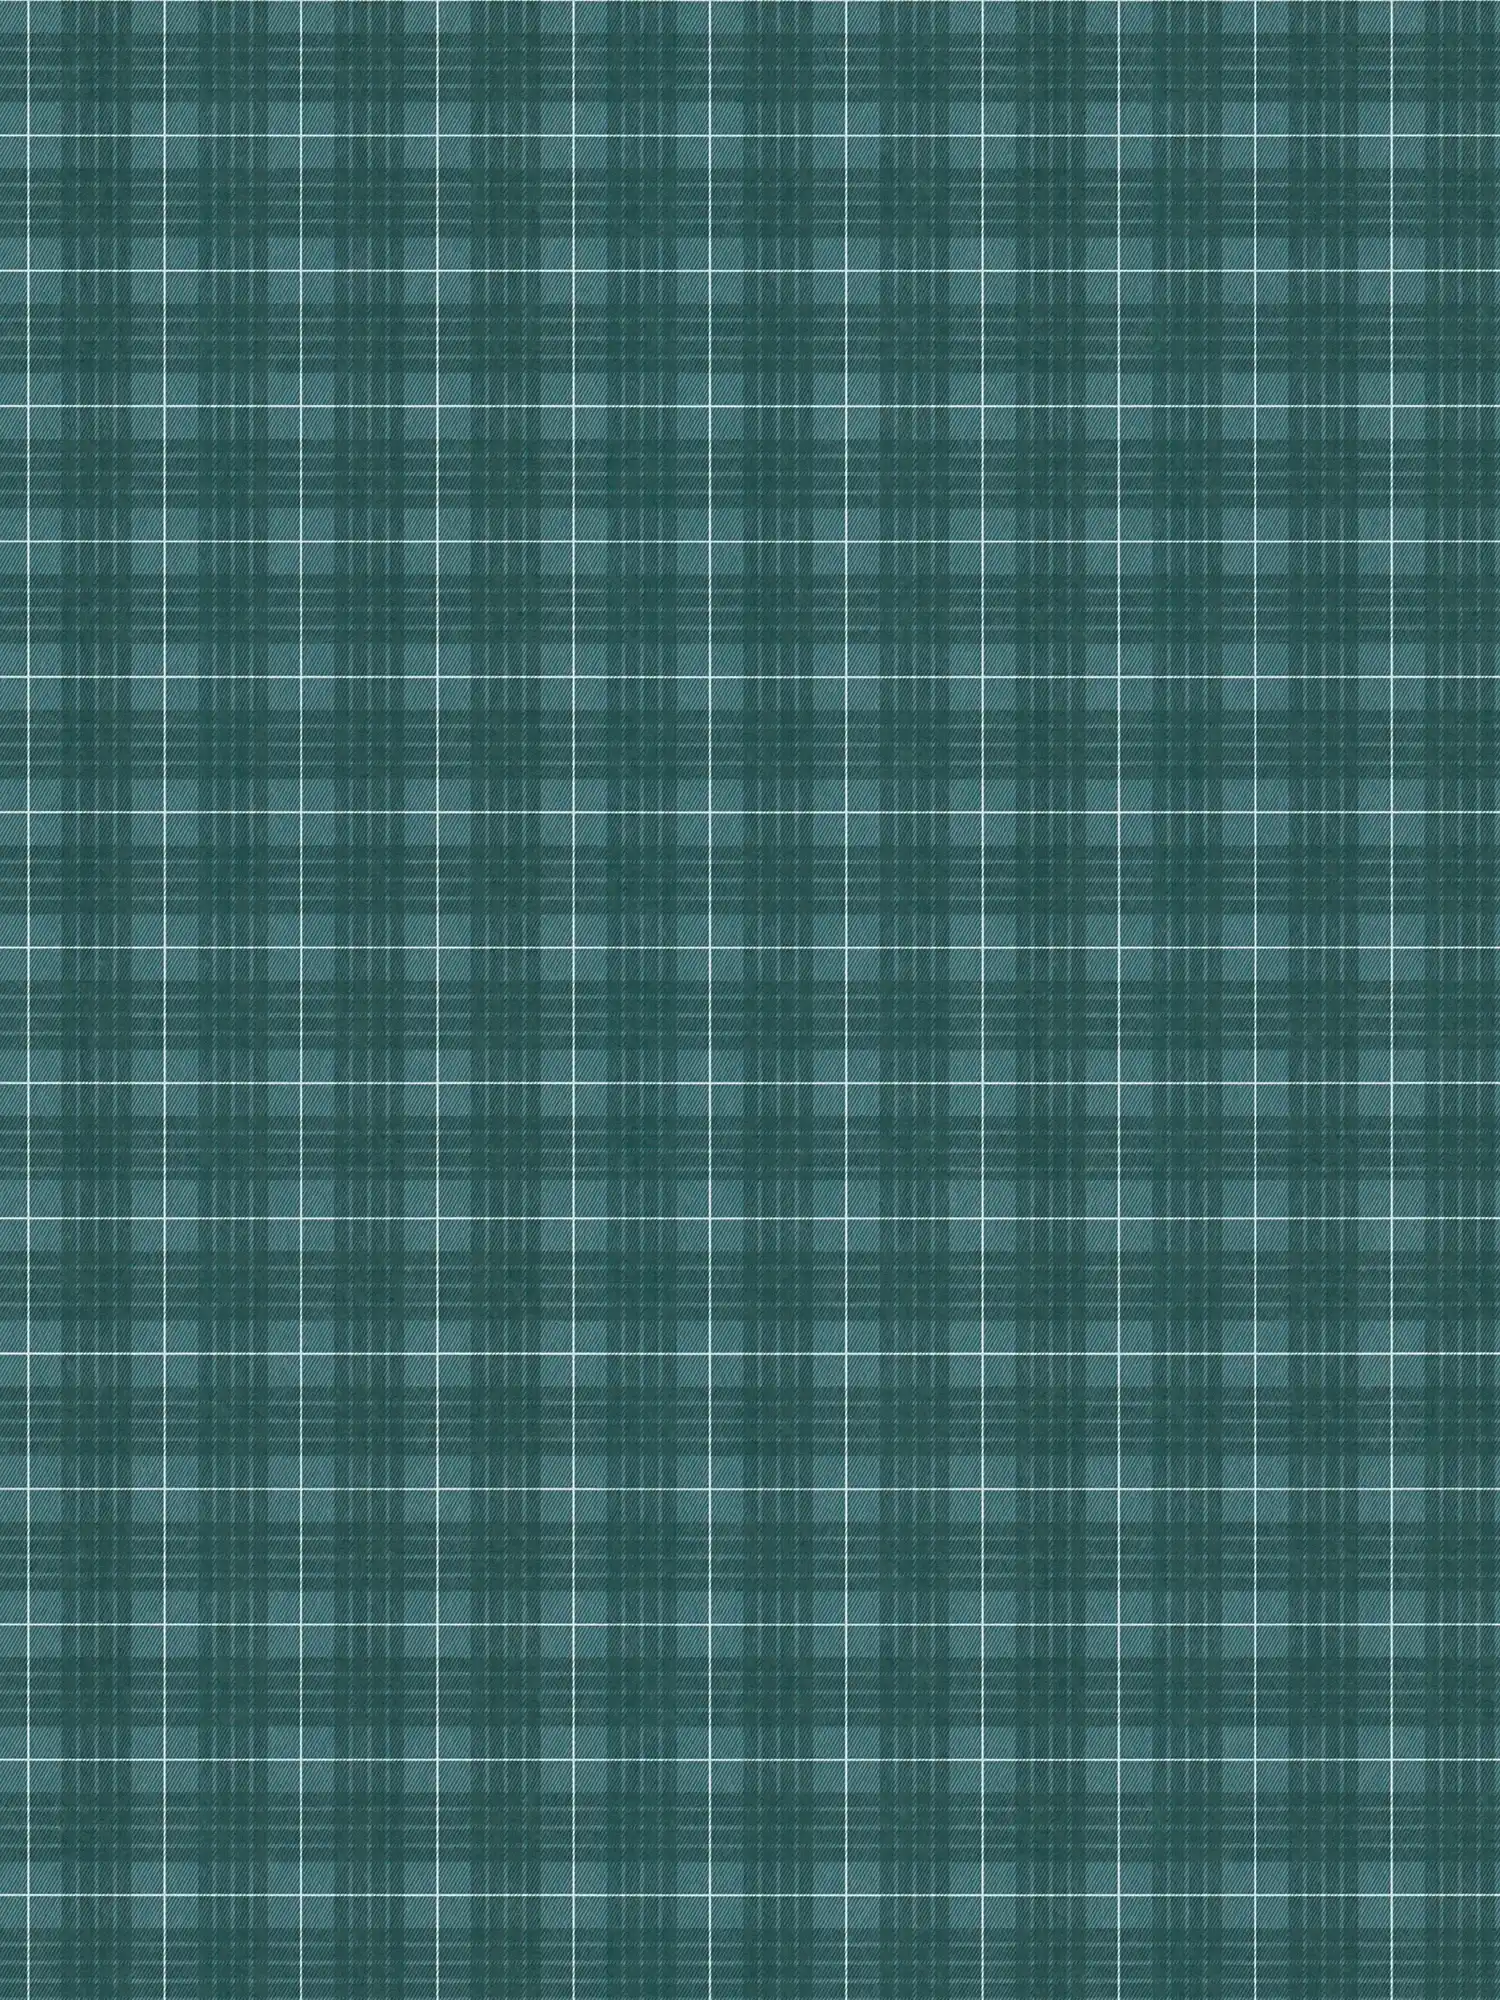         Checkered Textile Optics Non-woven Wallpaper with Flannel Pattern - Green, White
    